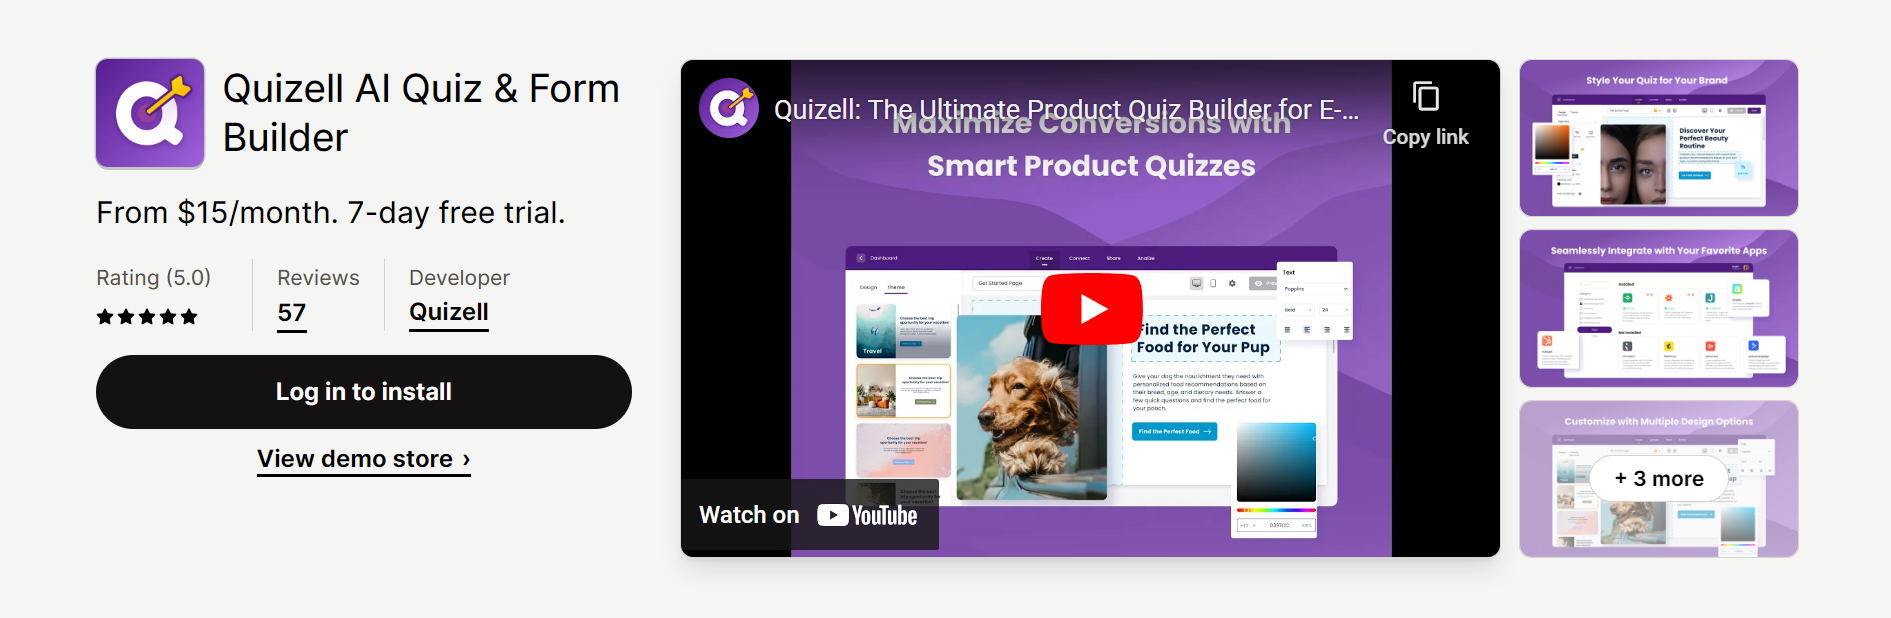 Quizell AI Quiz & Form Builder